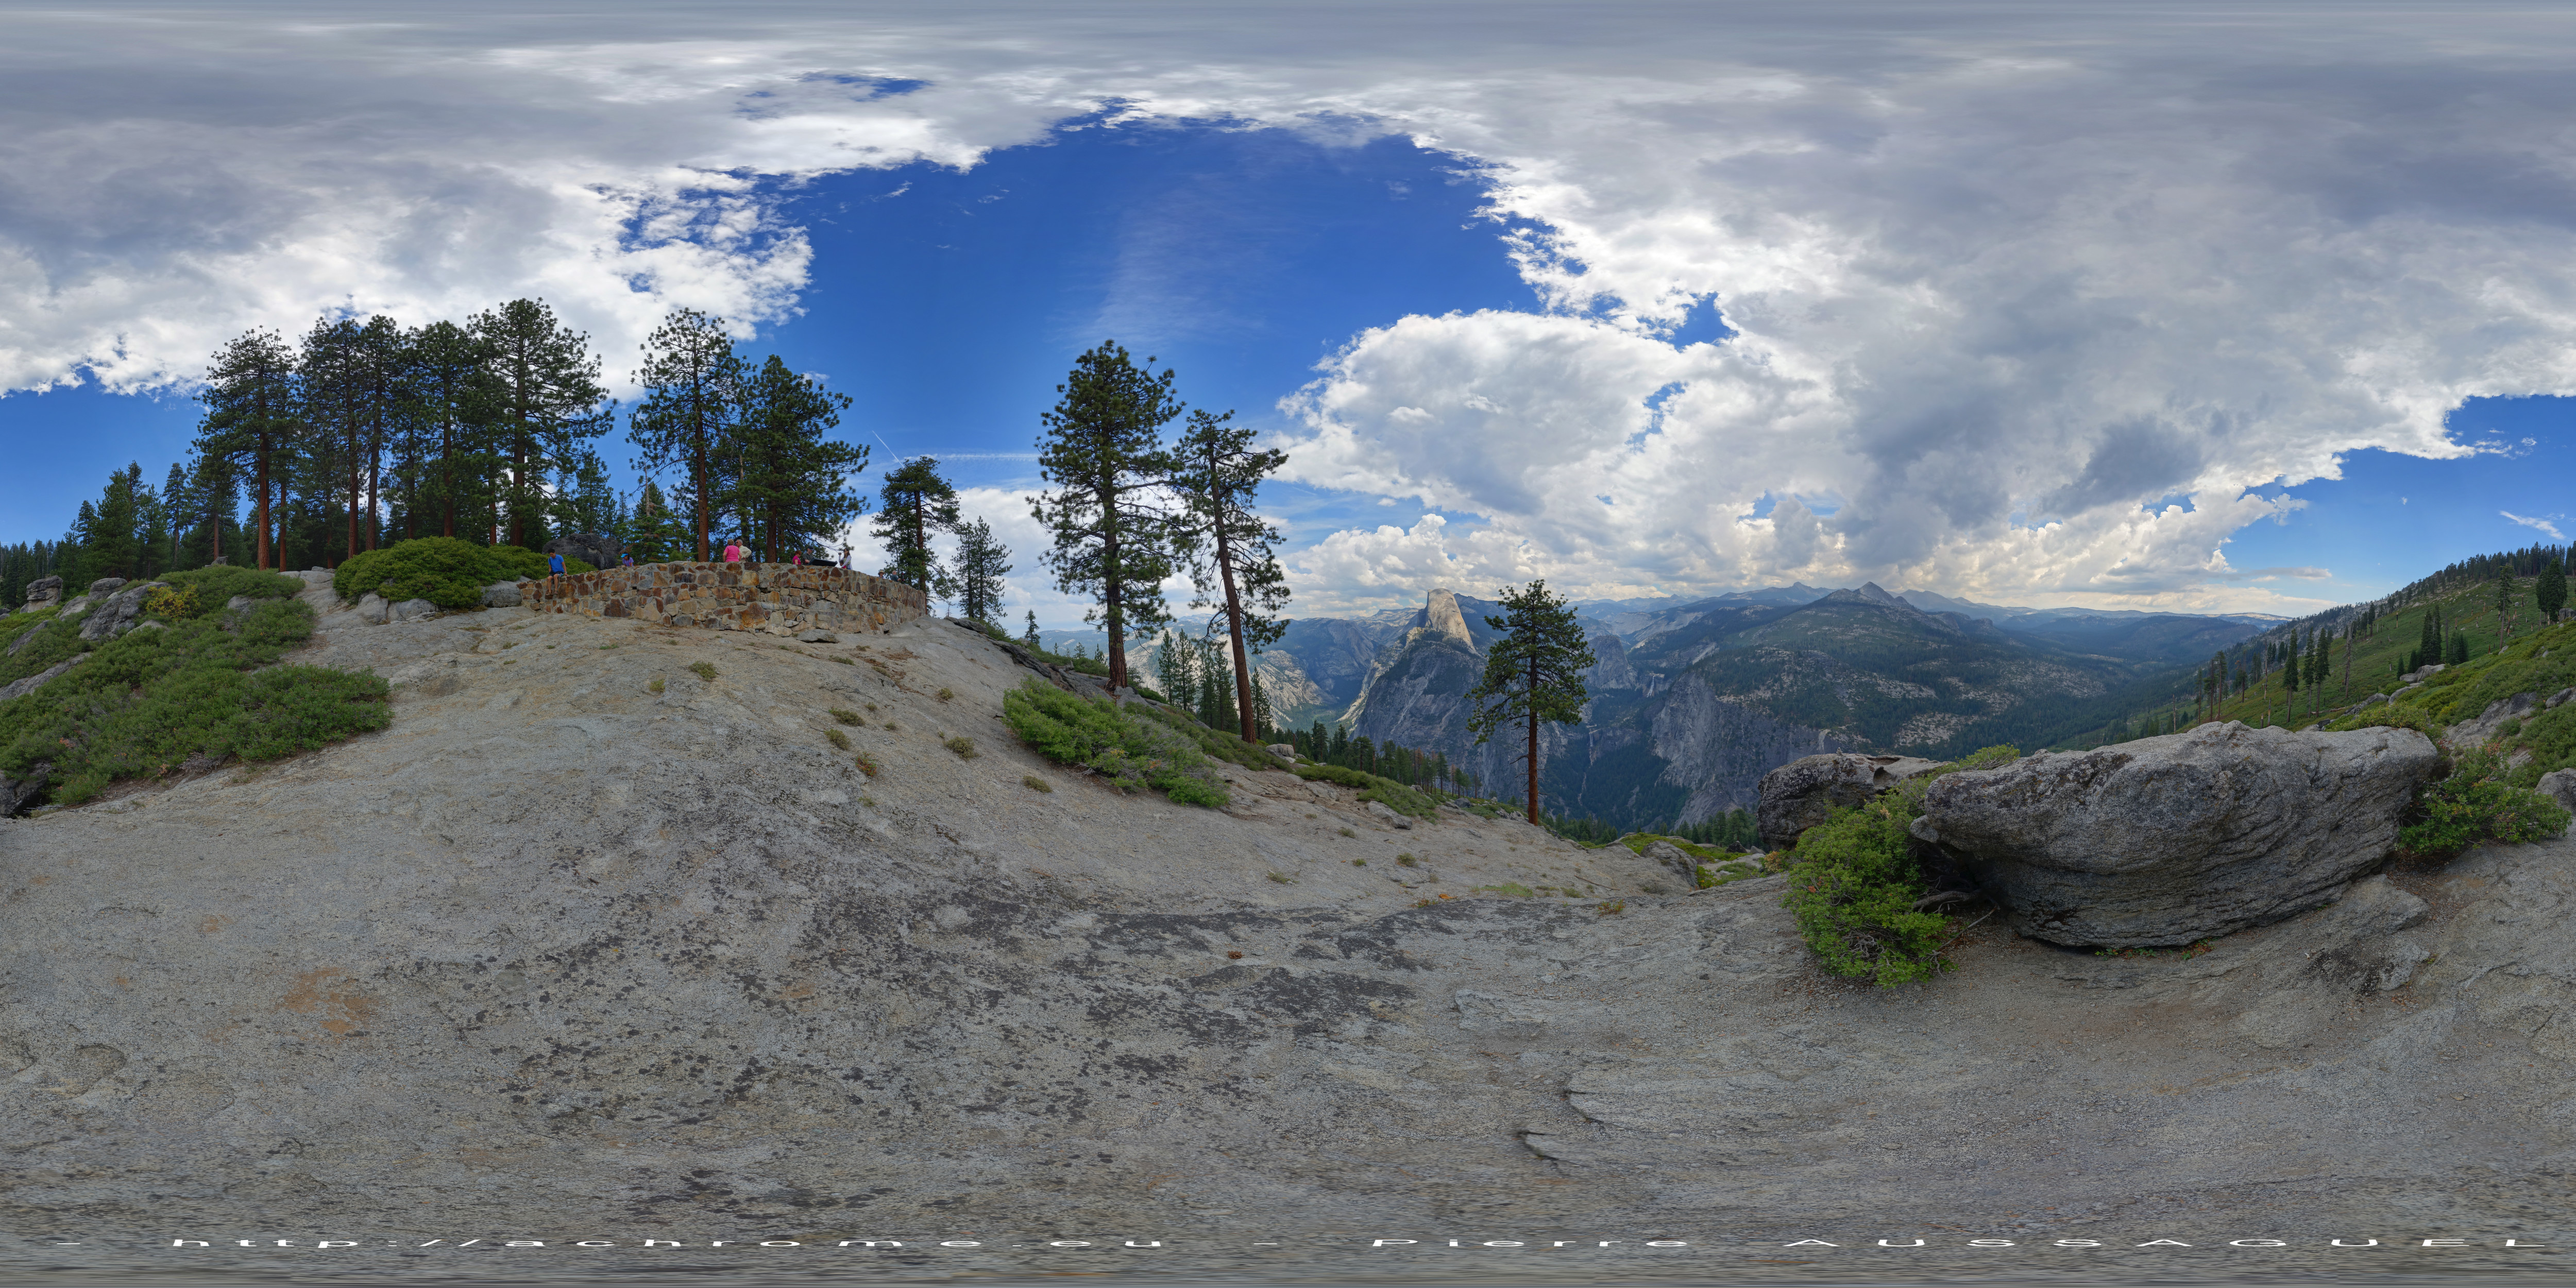 360-Half_dome-Yosemite_Park-Californie.jpg